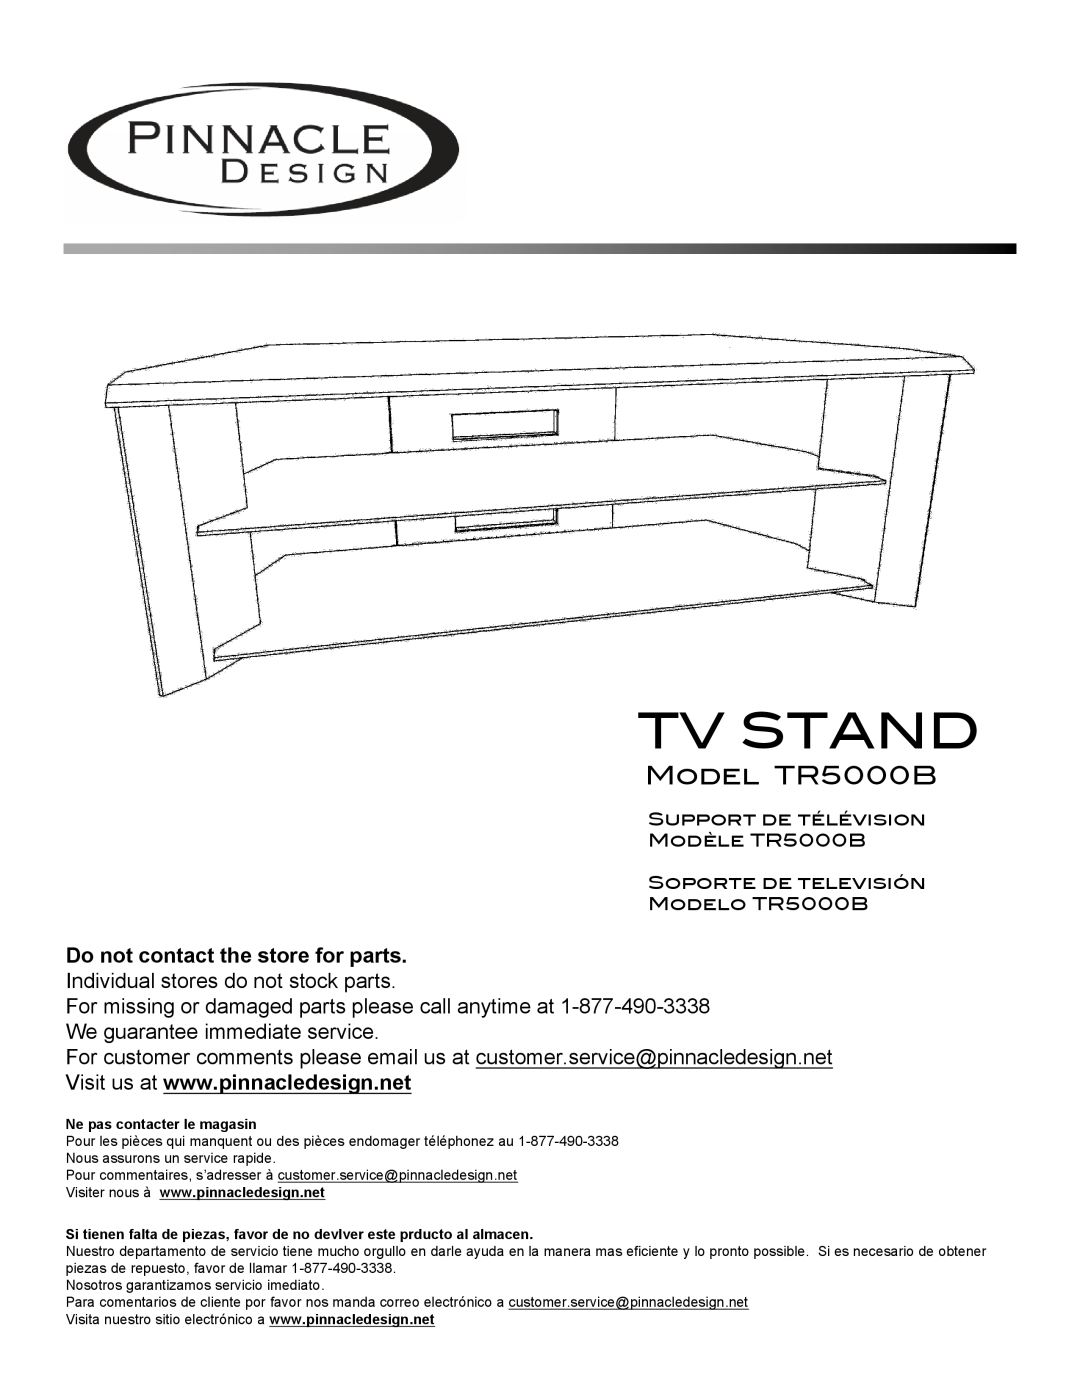 Pinnacle Design manual Model TR5000B, Tv Stand, Ne pas contacter le magasin 